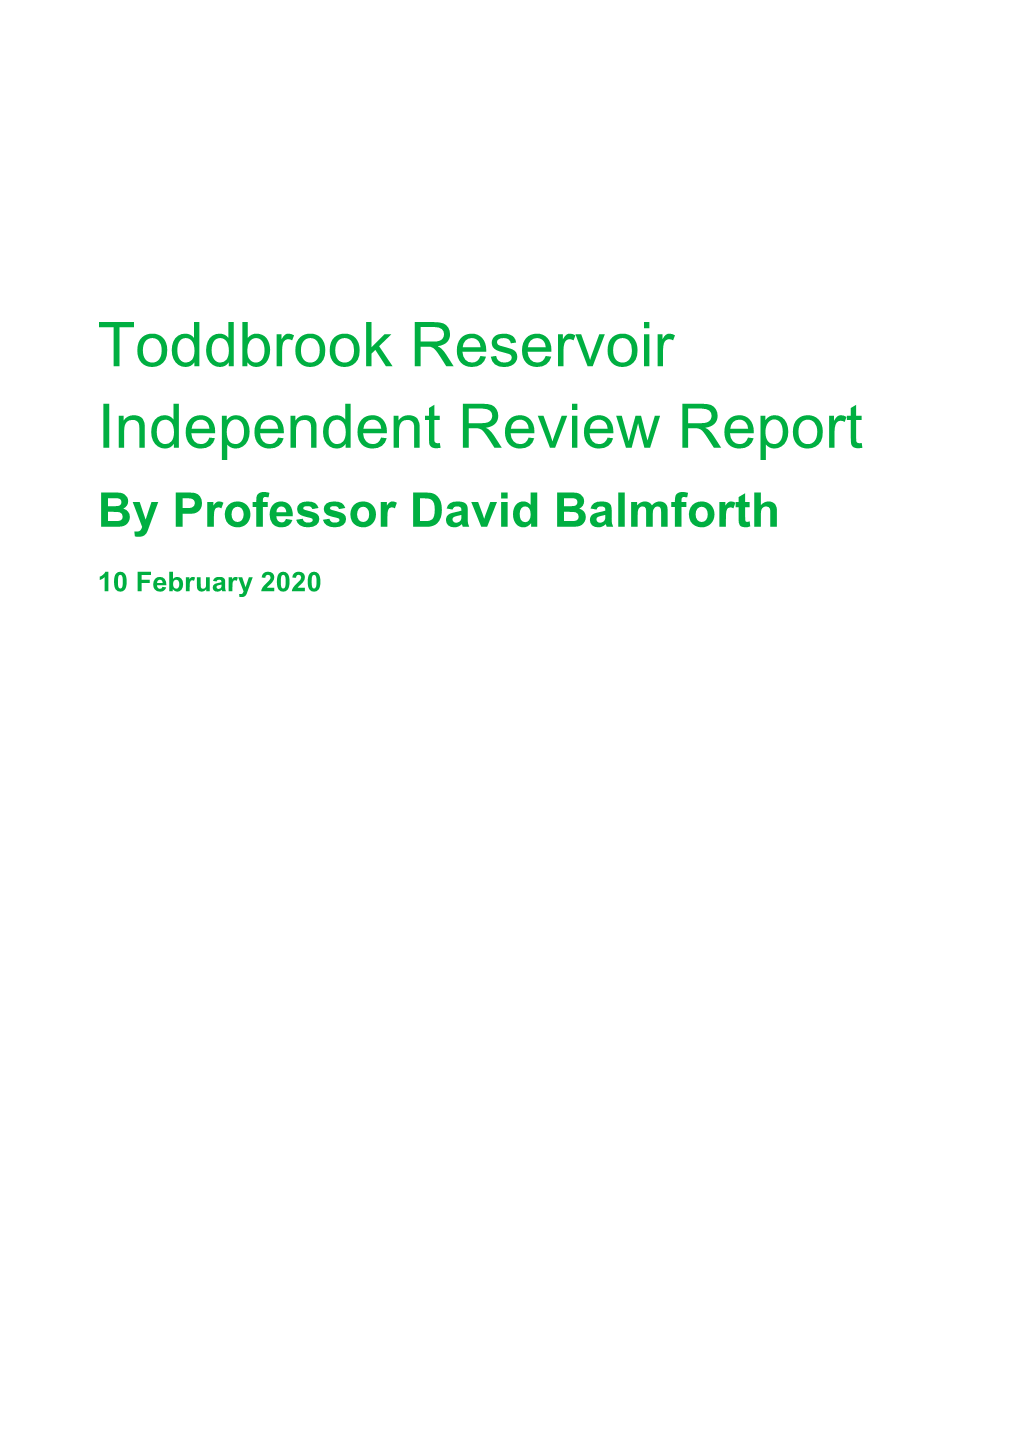 Toddbrook Reservoir Independent Review Report by Professor David Balmforth